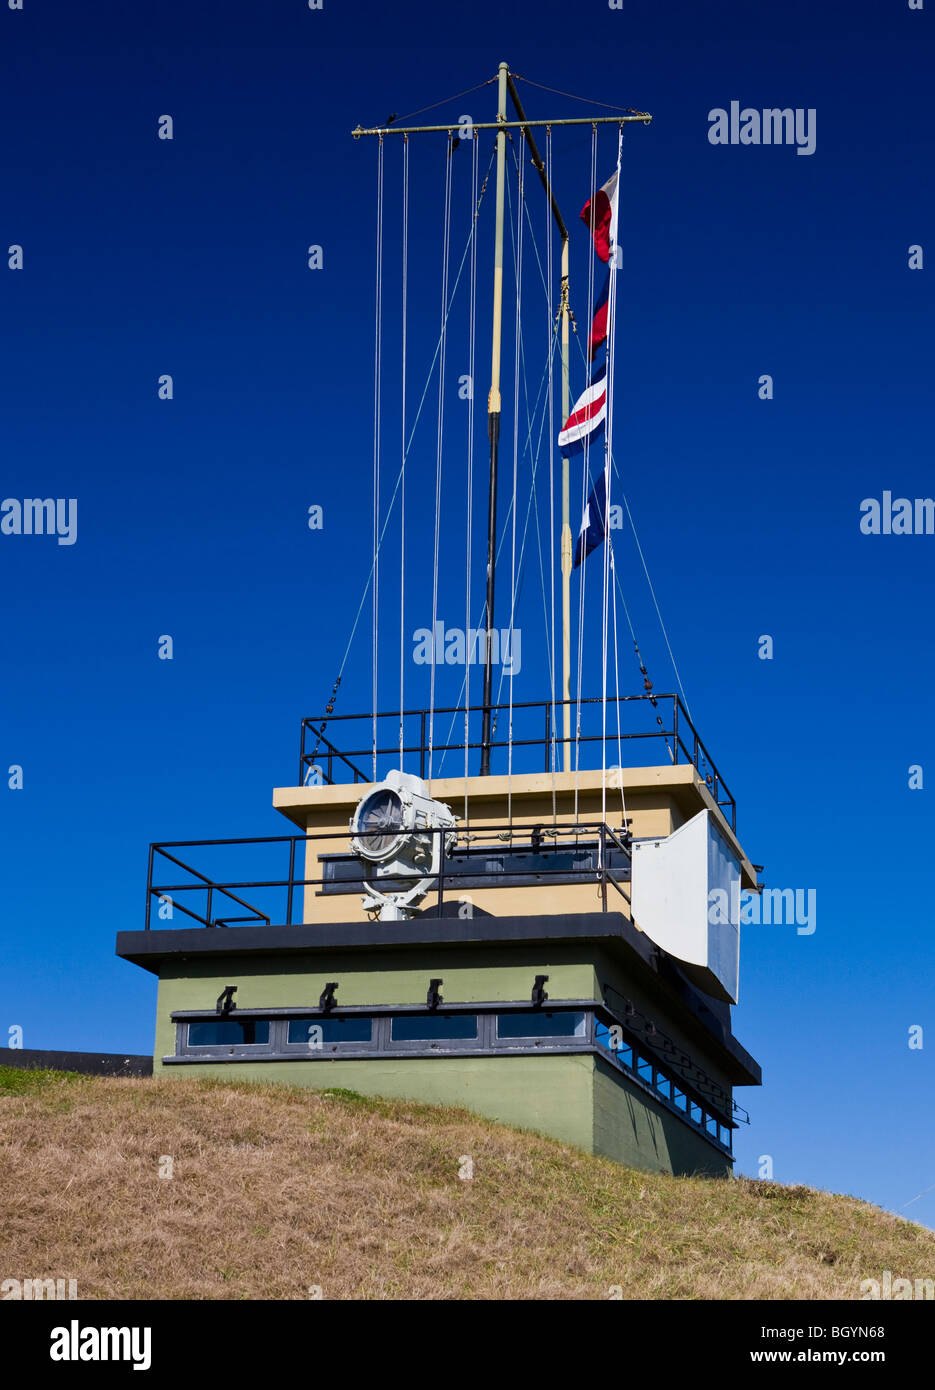 World War II era watch tower at Fort Moultrie, Sullivan's Island, South Carolina, United States of America. Stock Photo